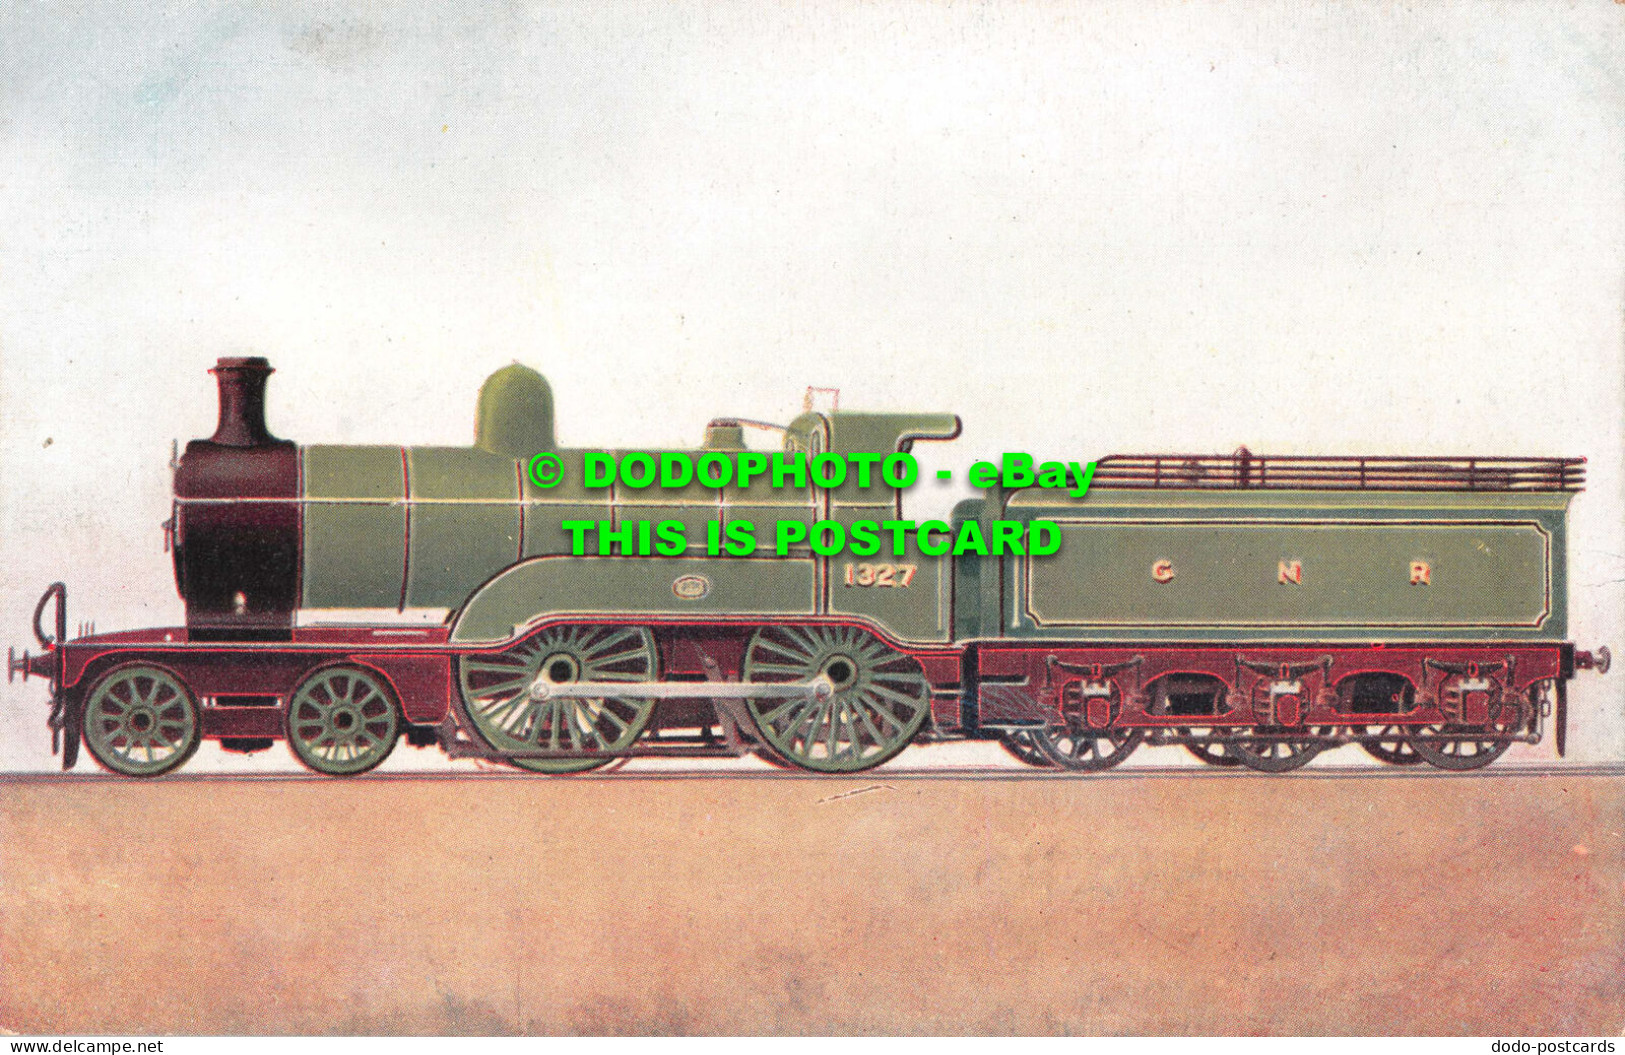 R546847 G. N. R. Express Passenger Engine. No. 1327. Photochrom - World